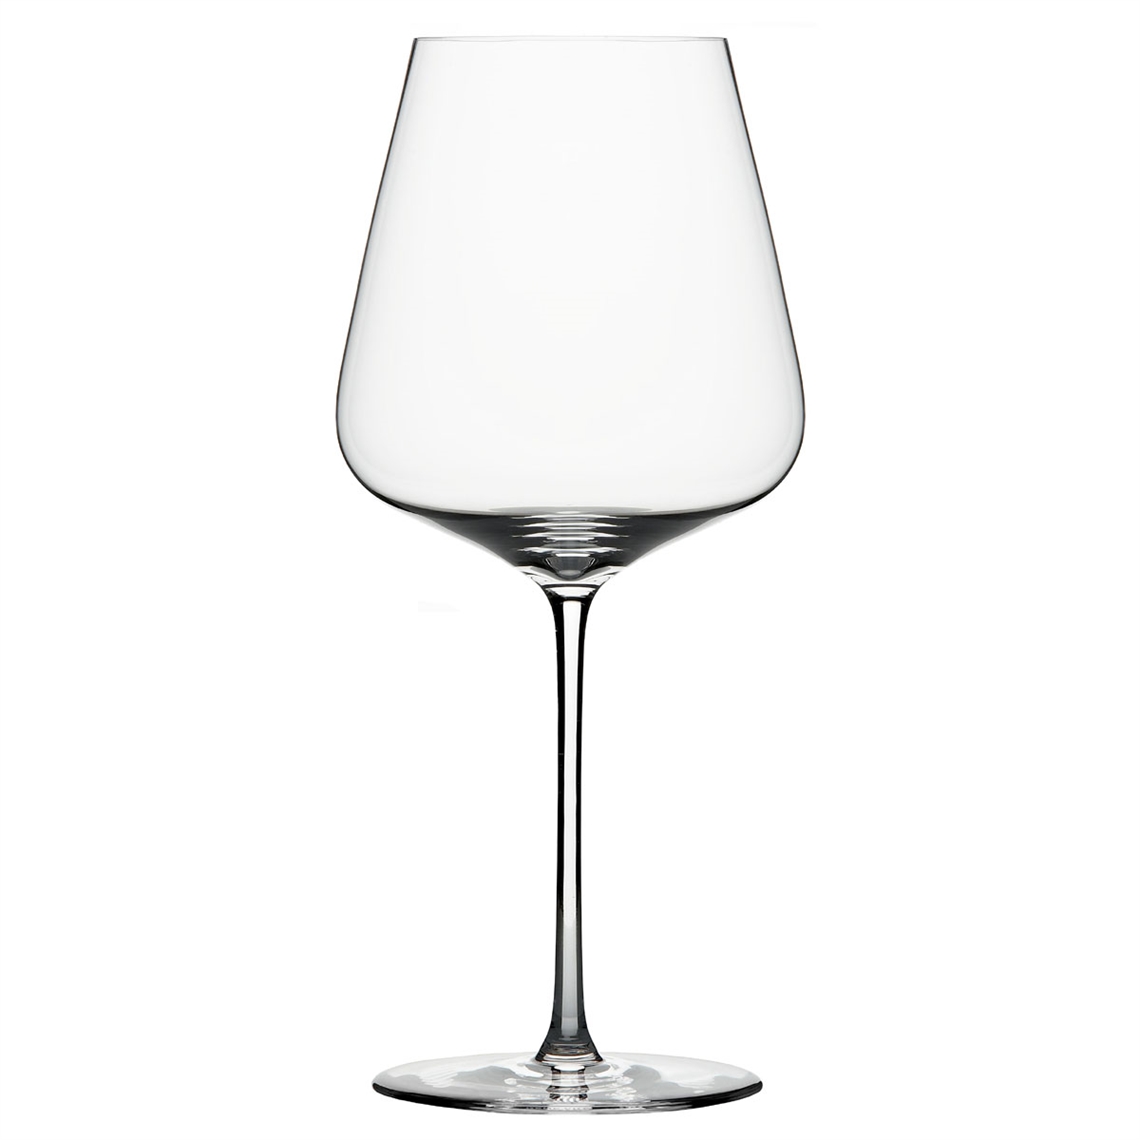 View more prosecco wine glasses from our Premium Mouth Blown Glassware range